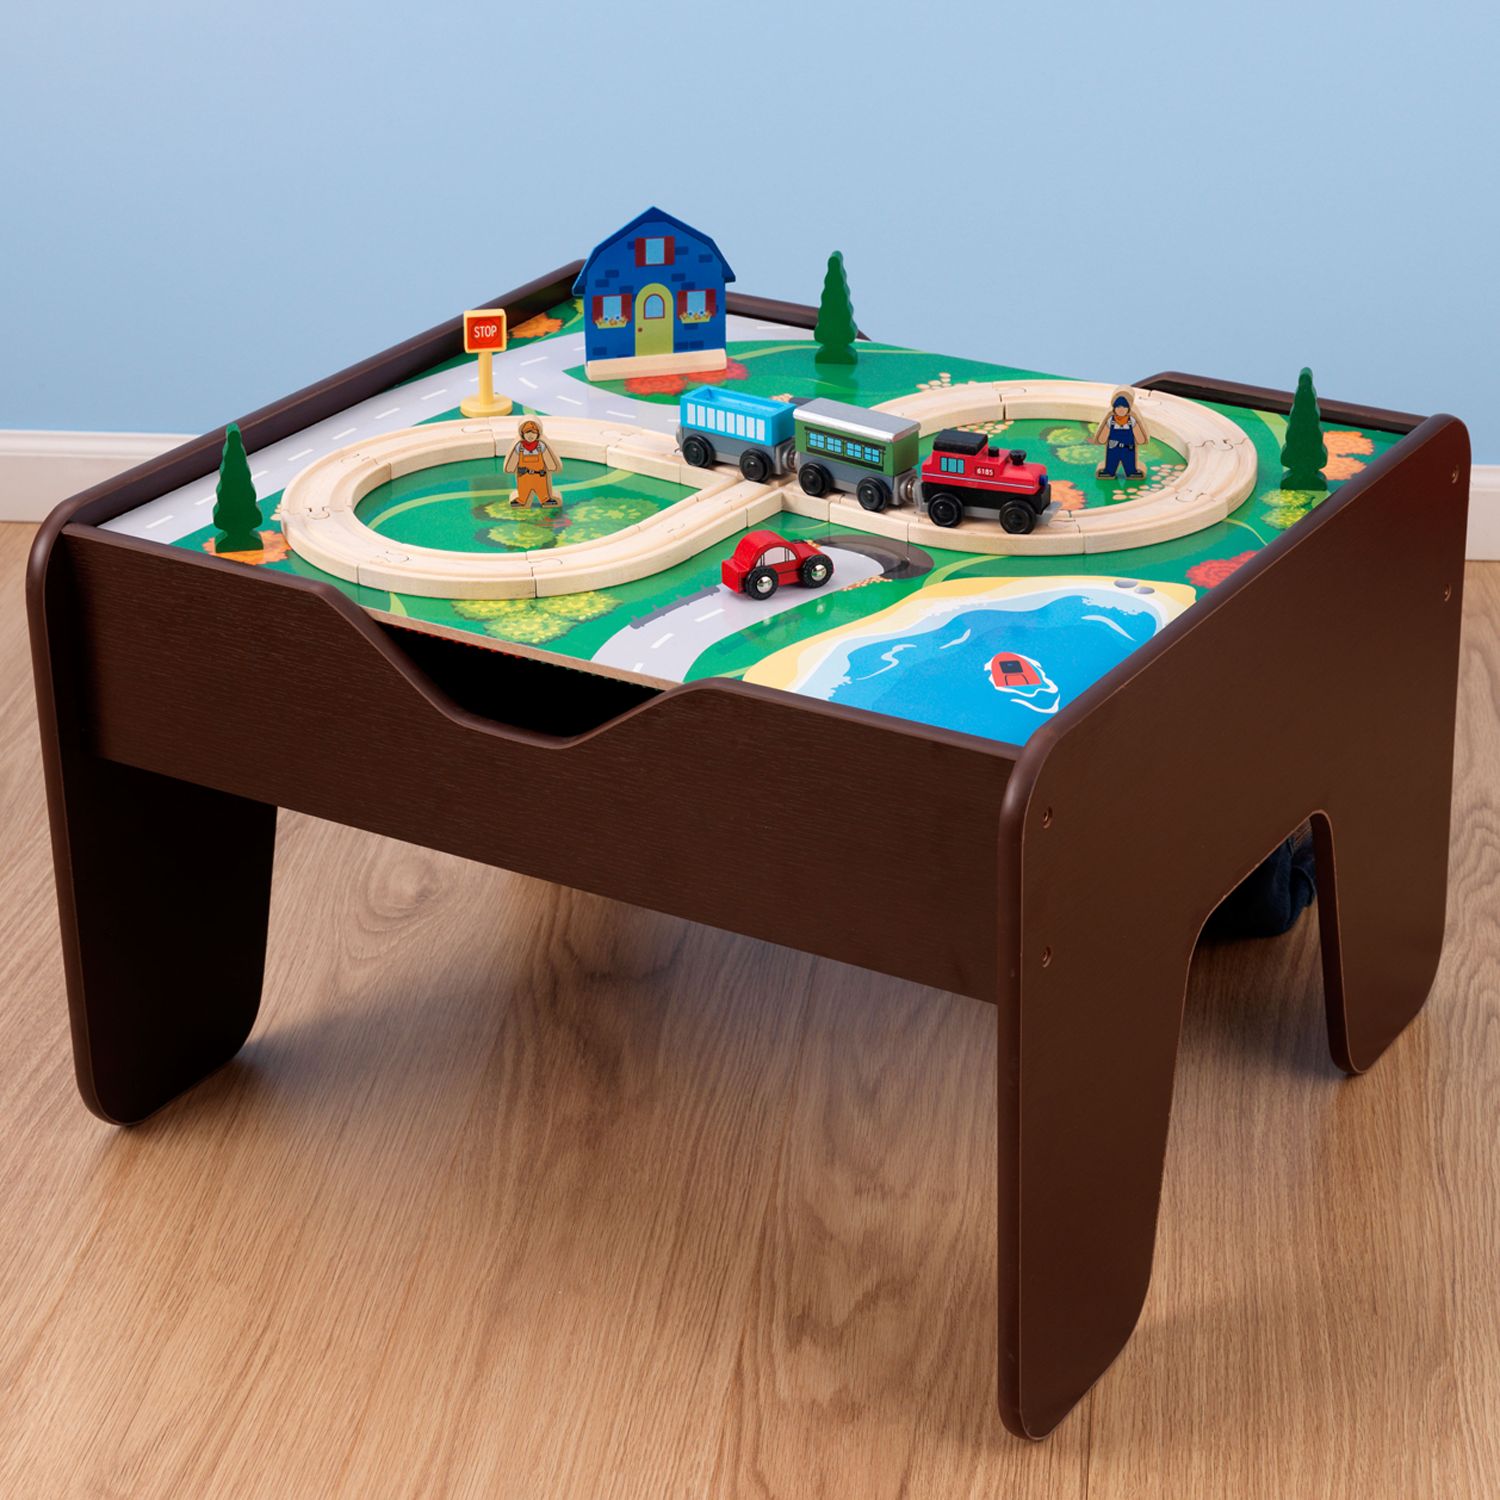 kidkraft wooden play table